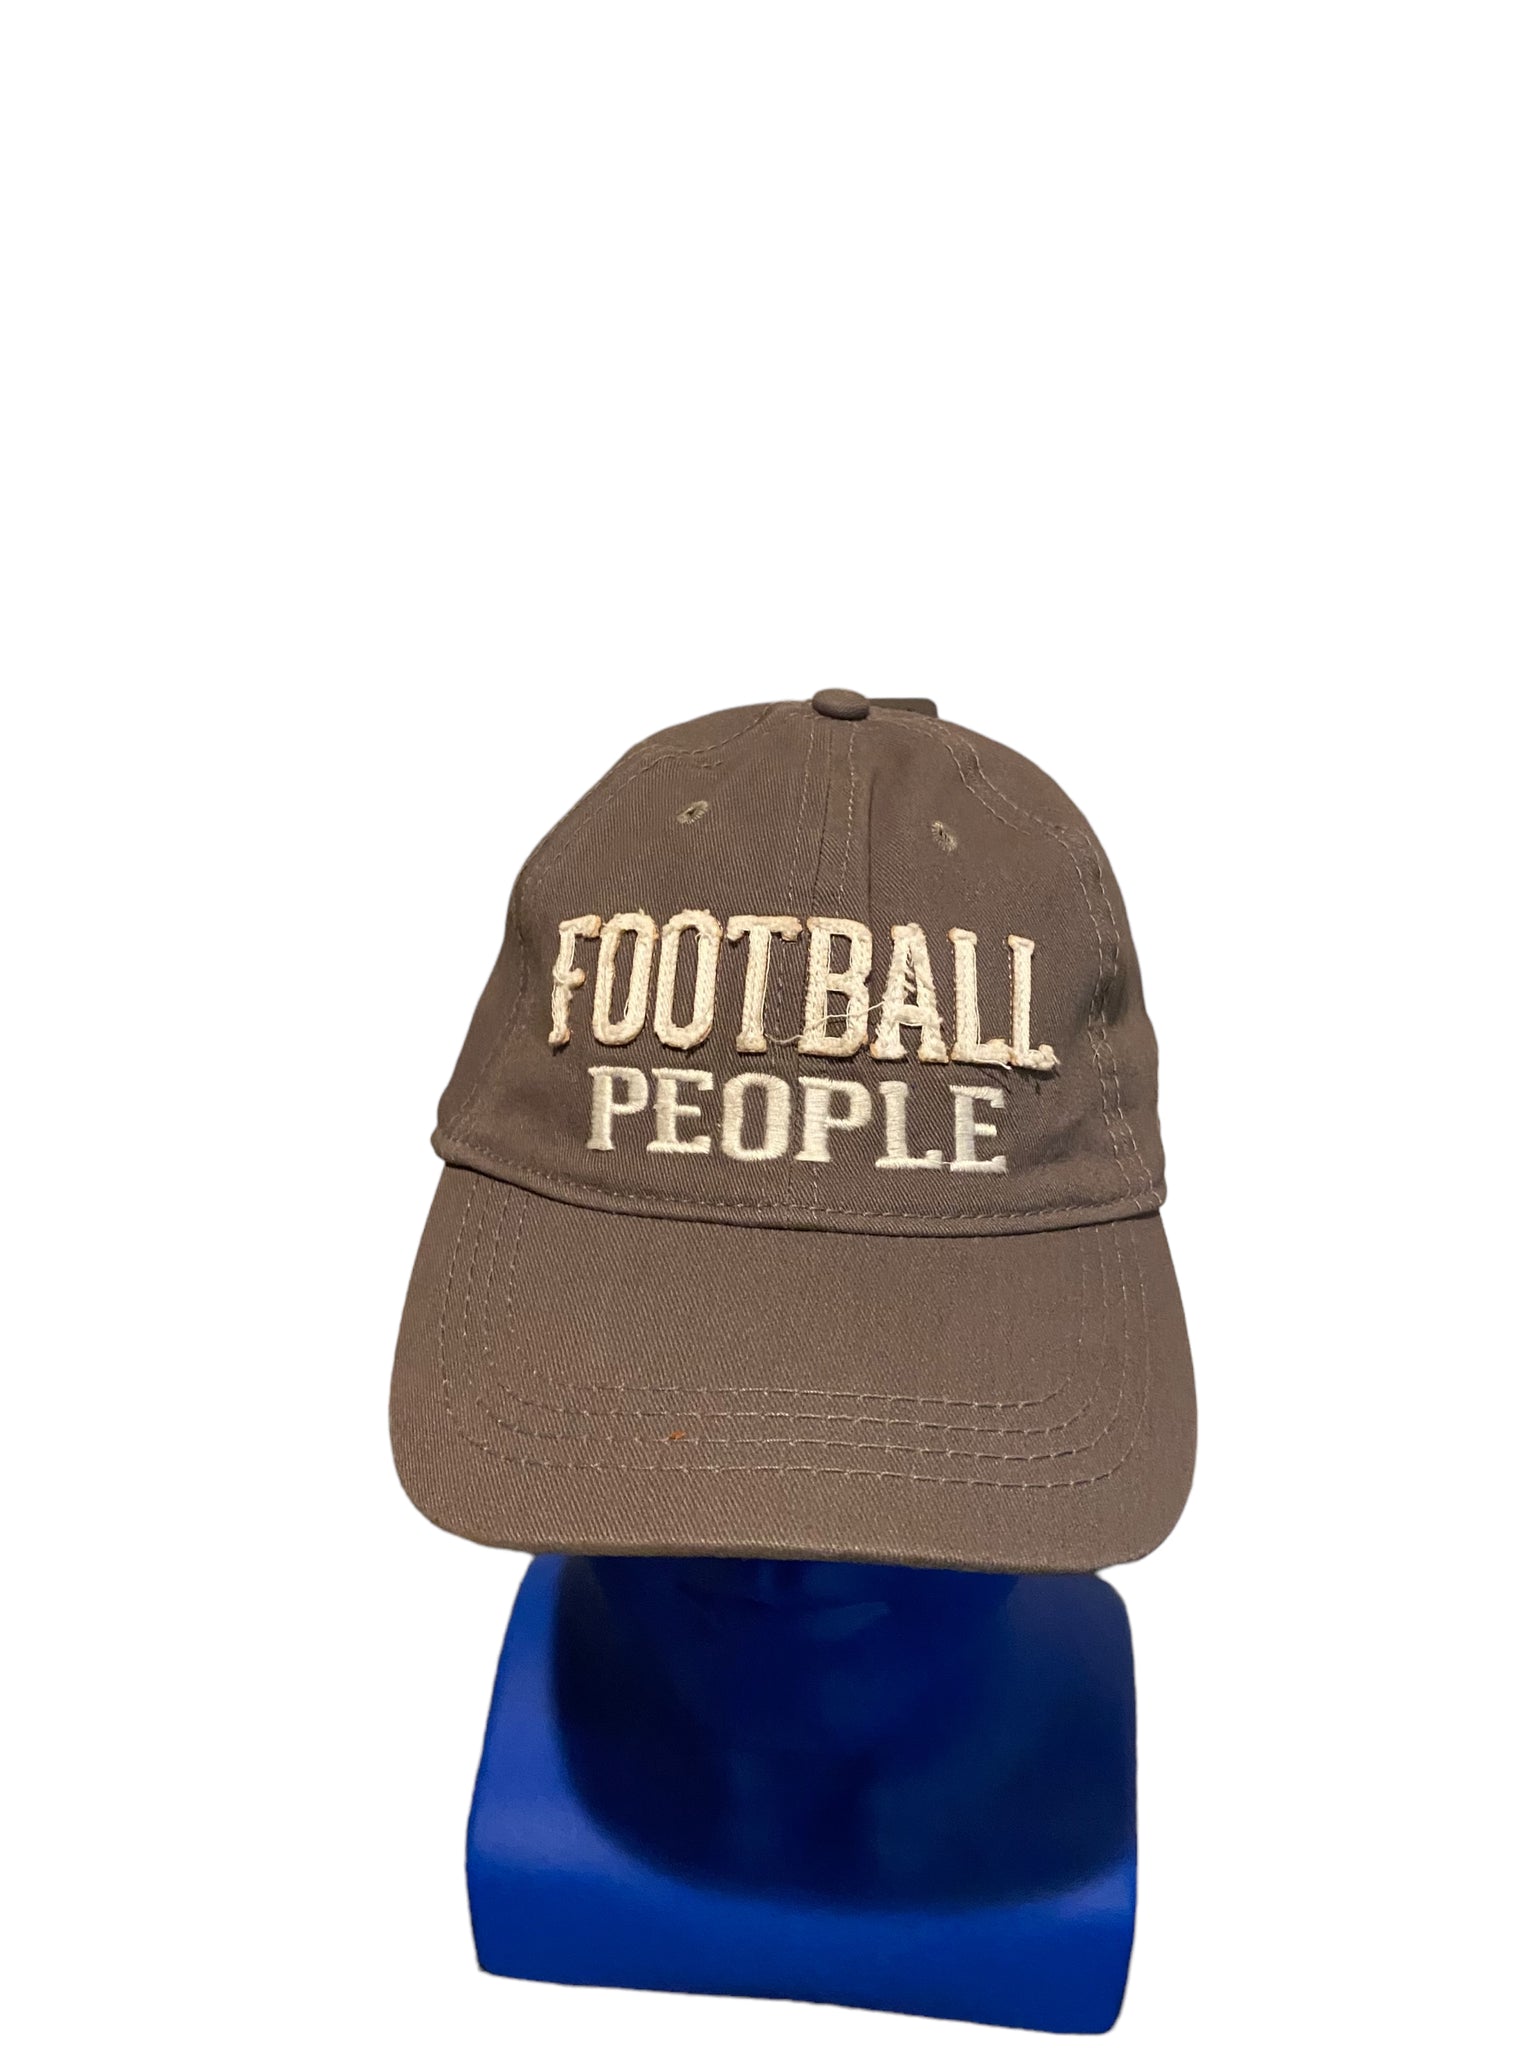 we people by pavilion football people script adjustable strap hat